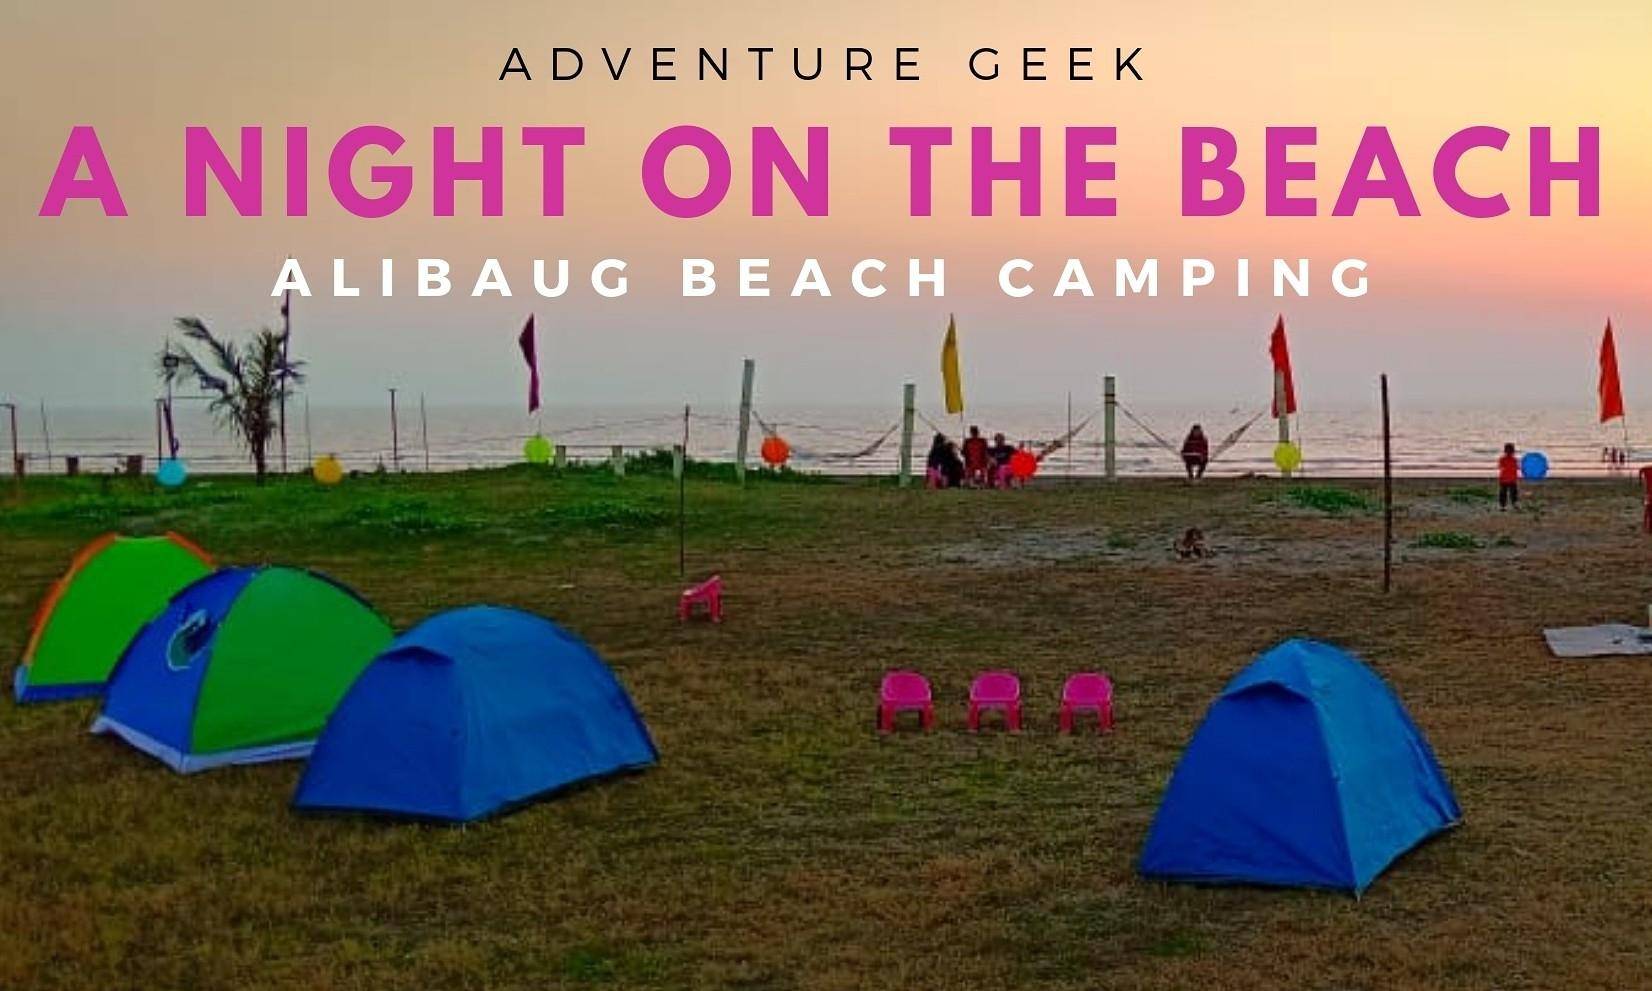 Alibaug Beach Camping